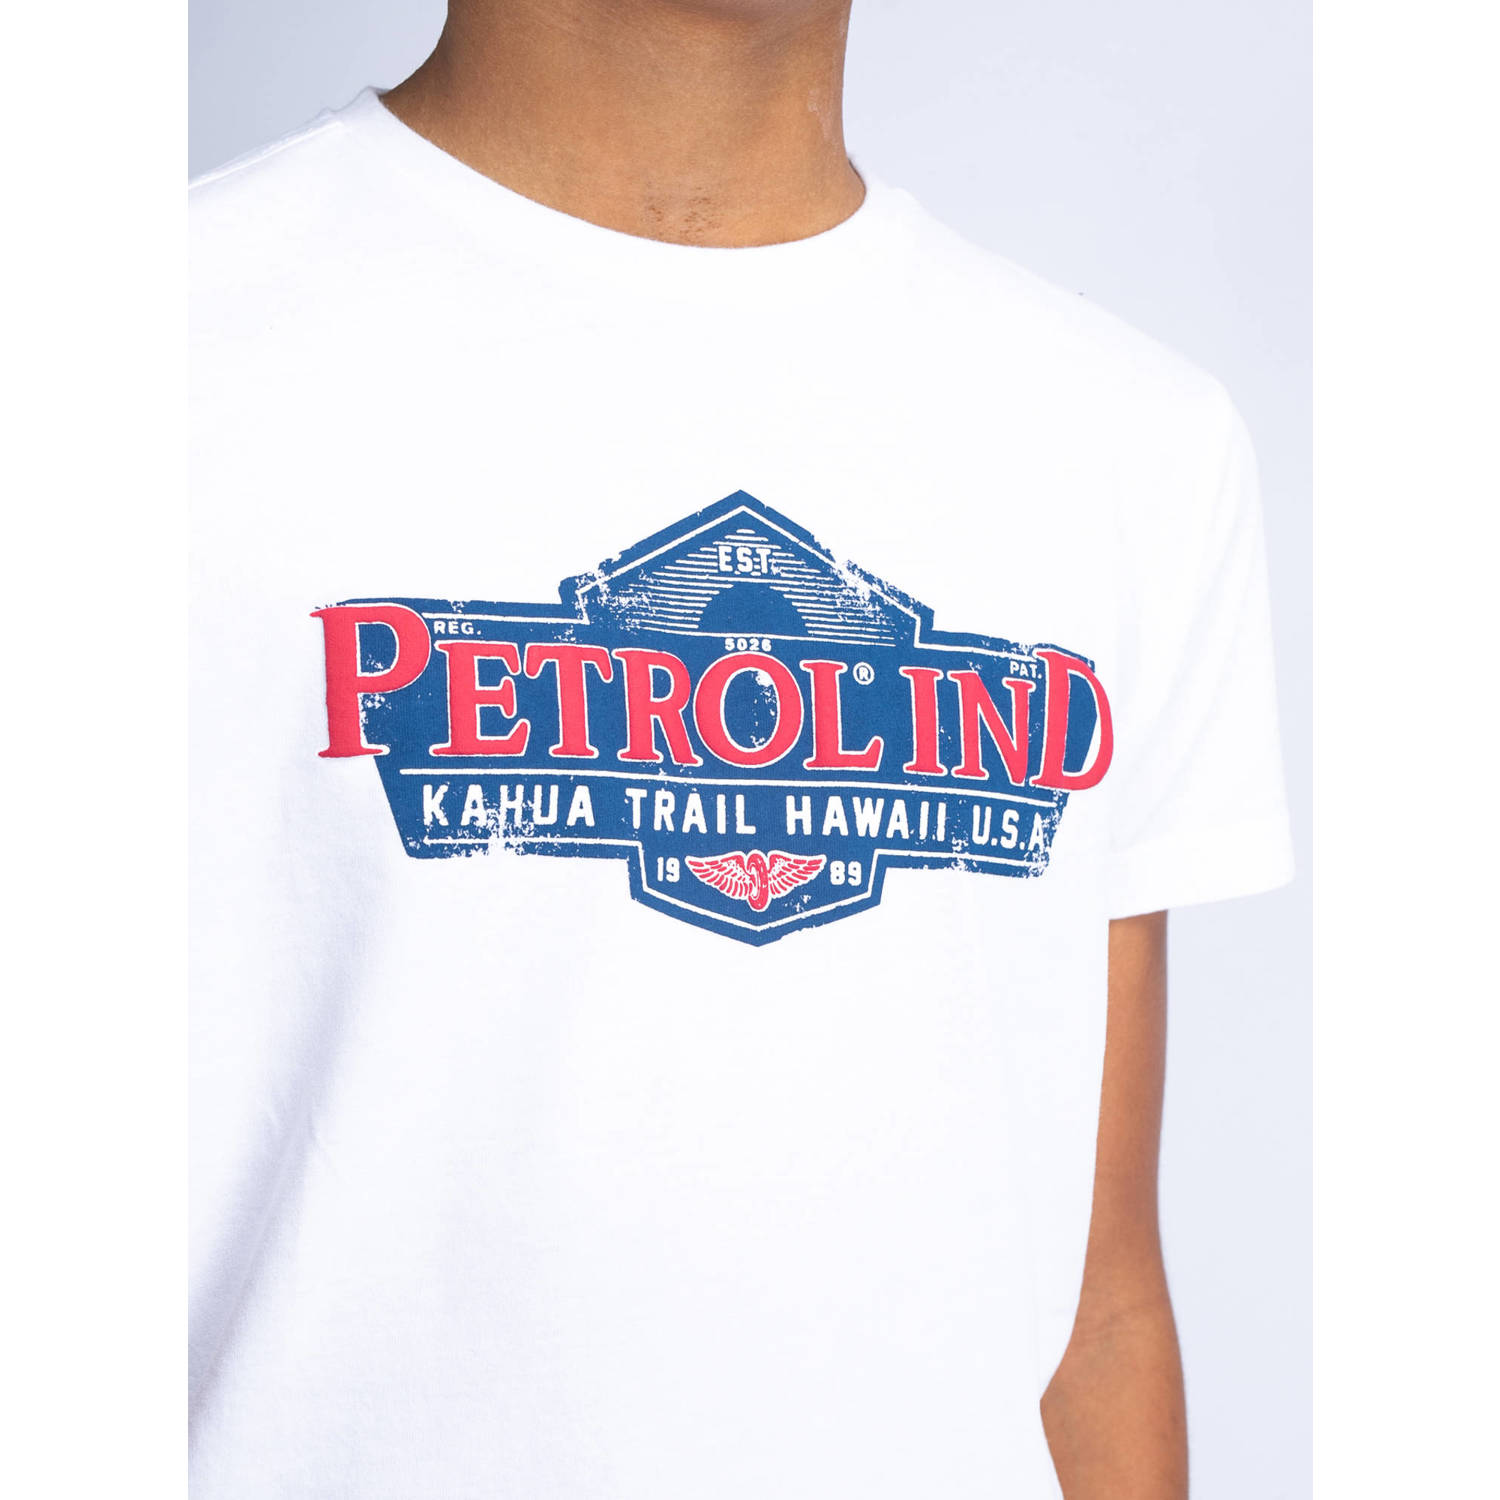 Petrol Industries T-shirt met logo wit